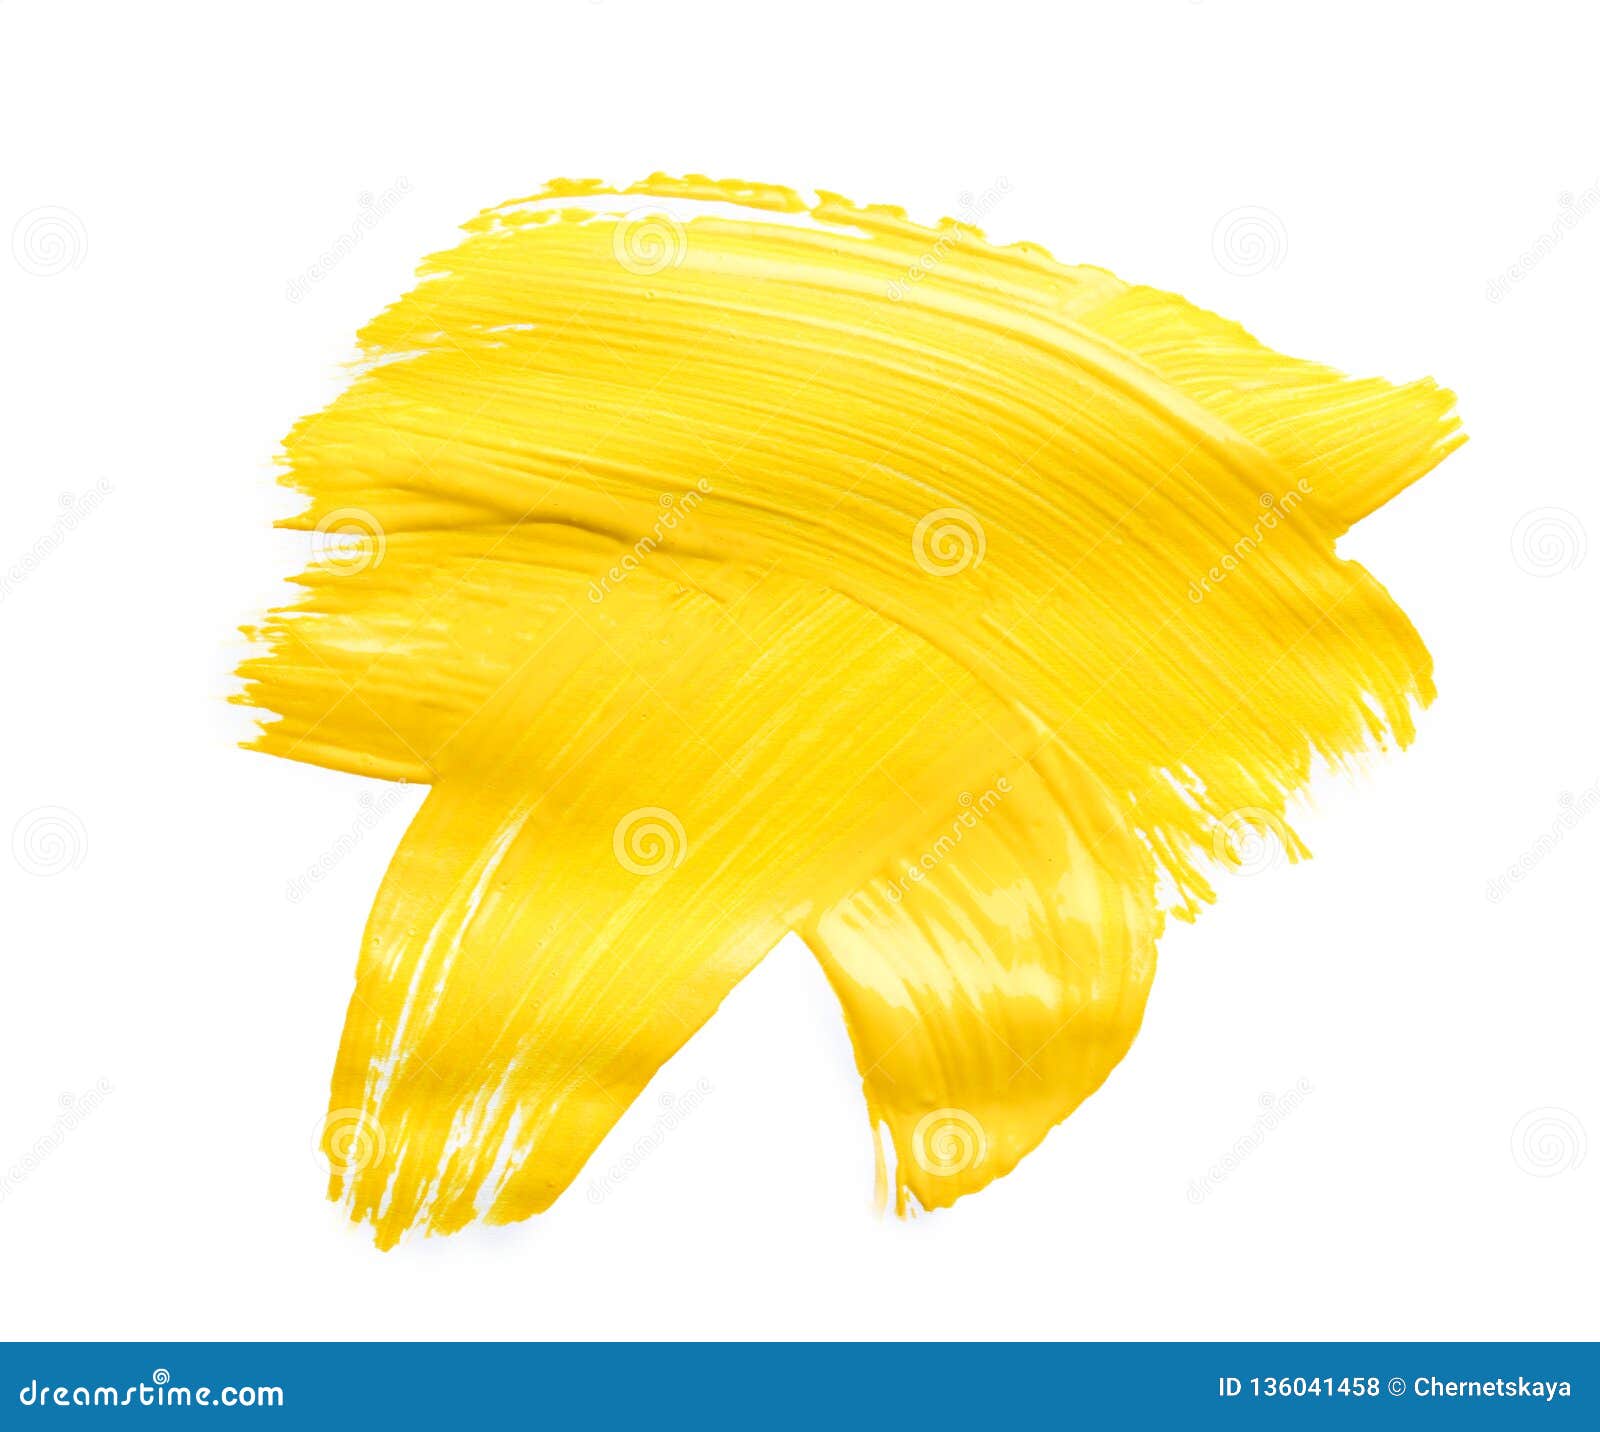 Yellow Paint Splash On White Background Stock Photography ...